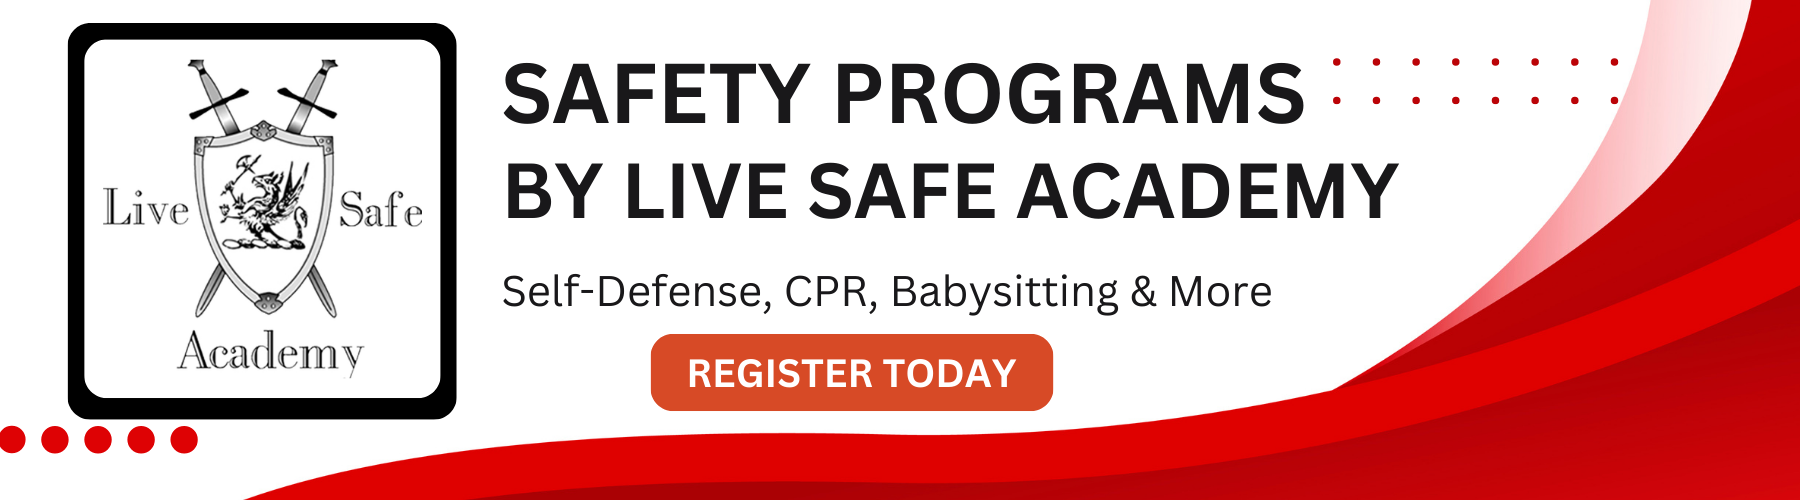 Life Safe Academy Programs